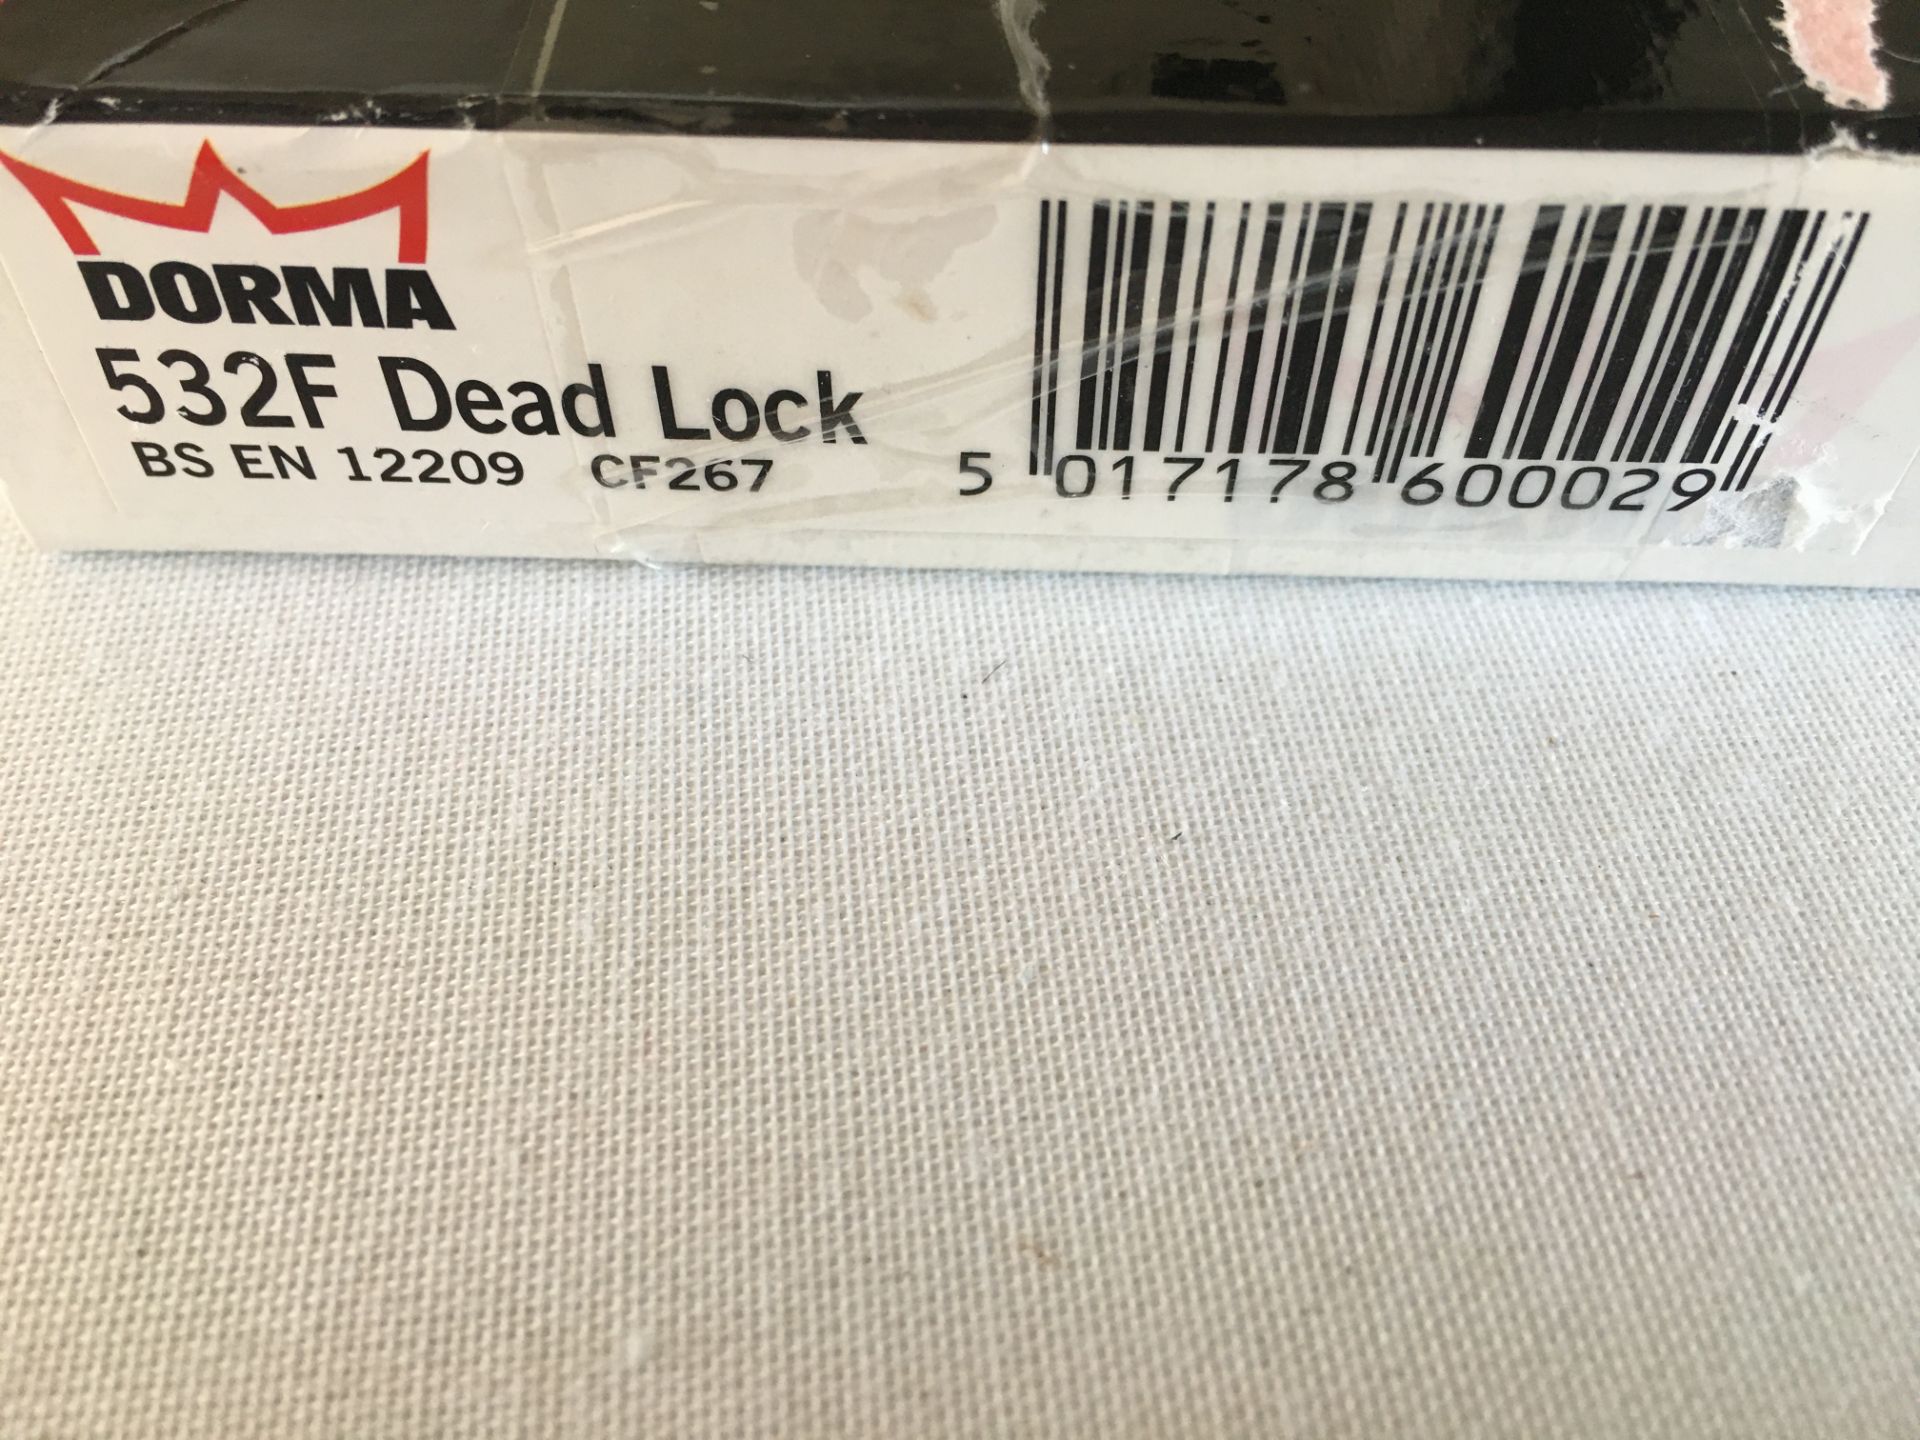 5 x dorma dead lock - Image 2 of 2